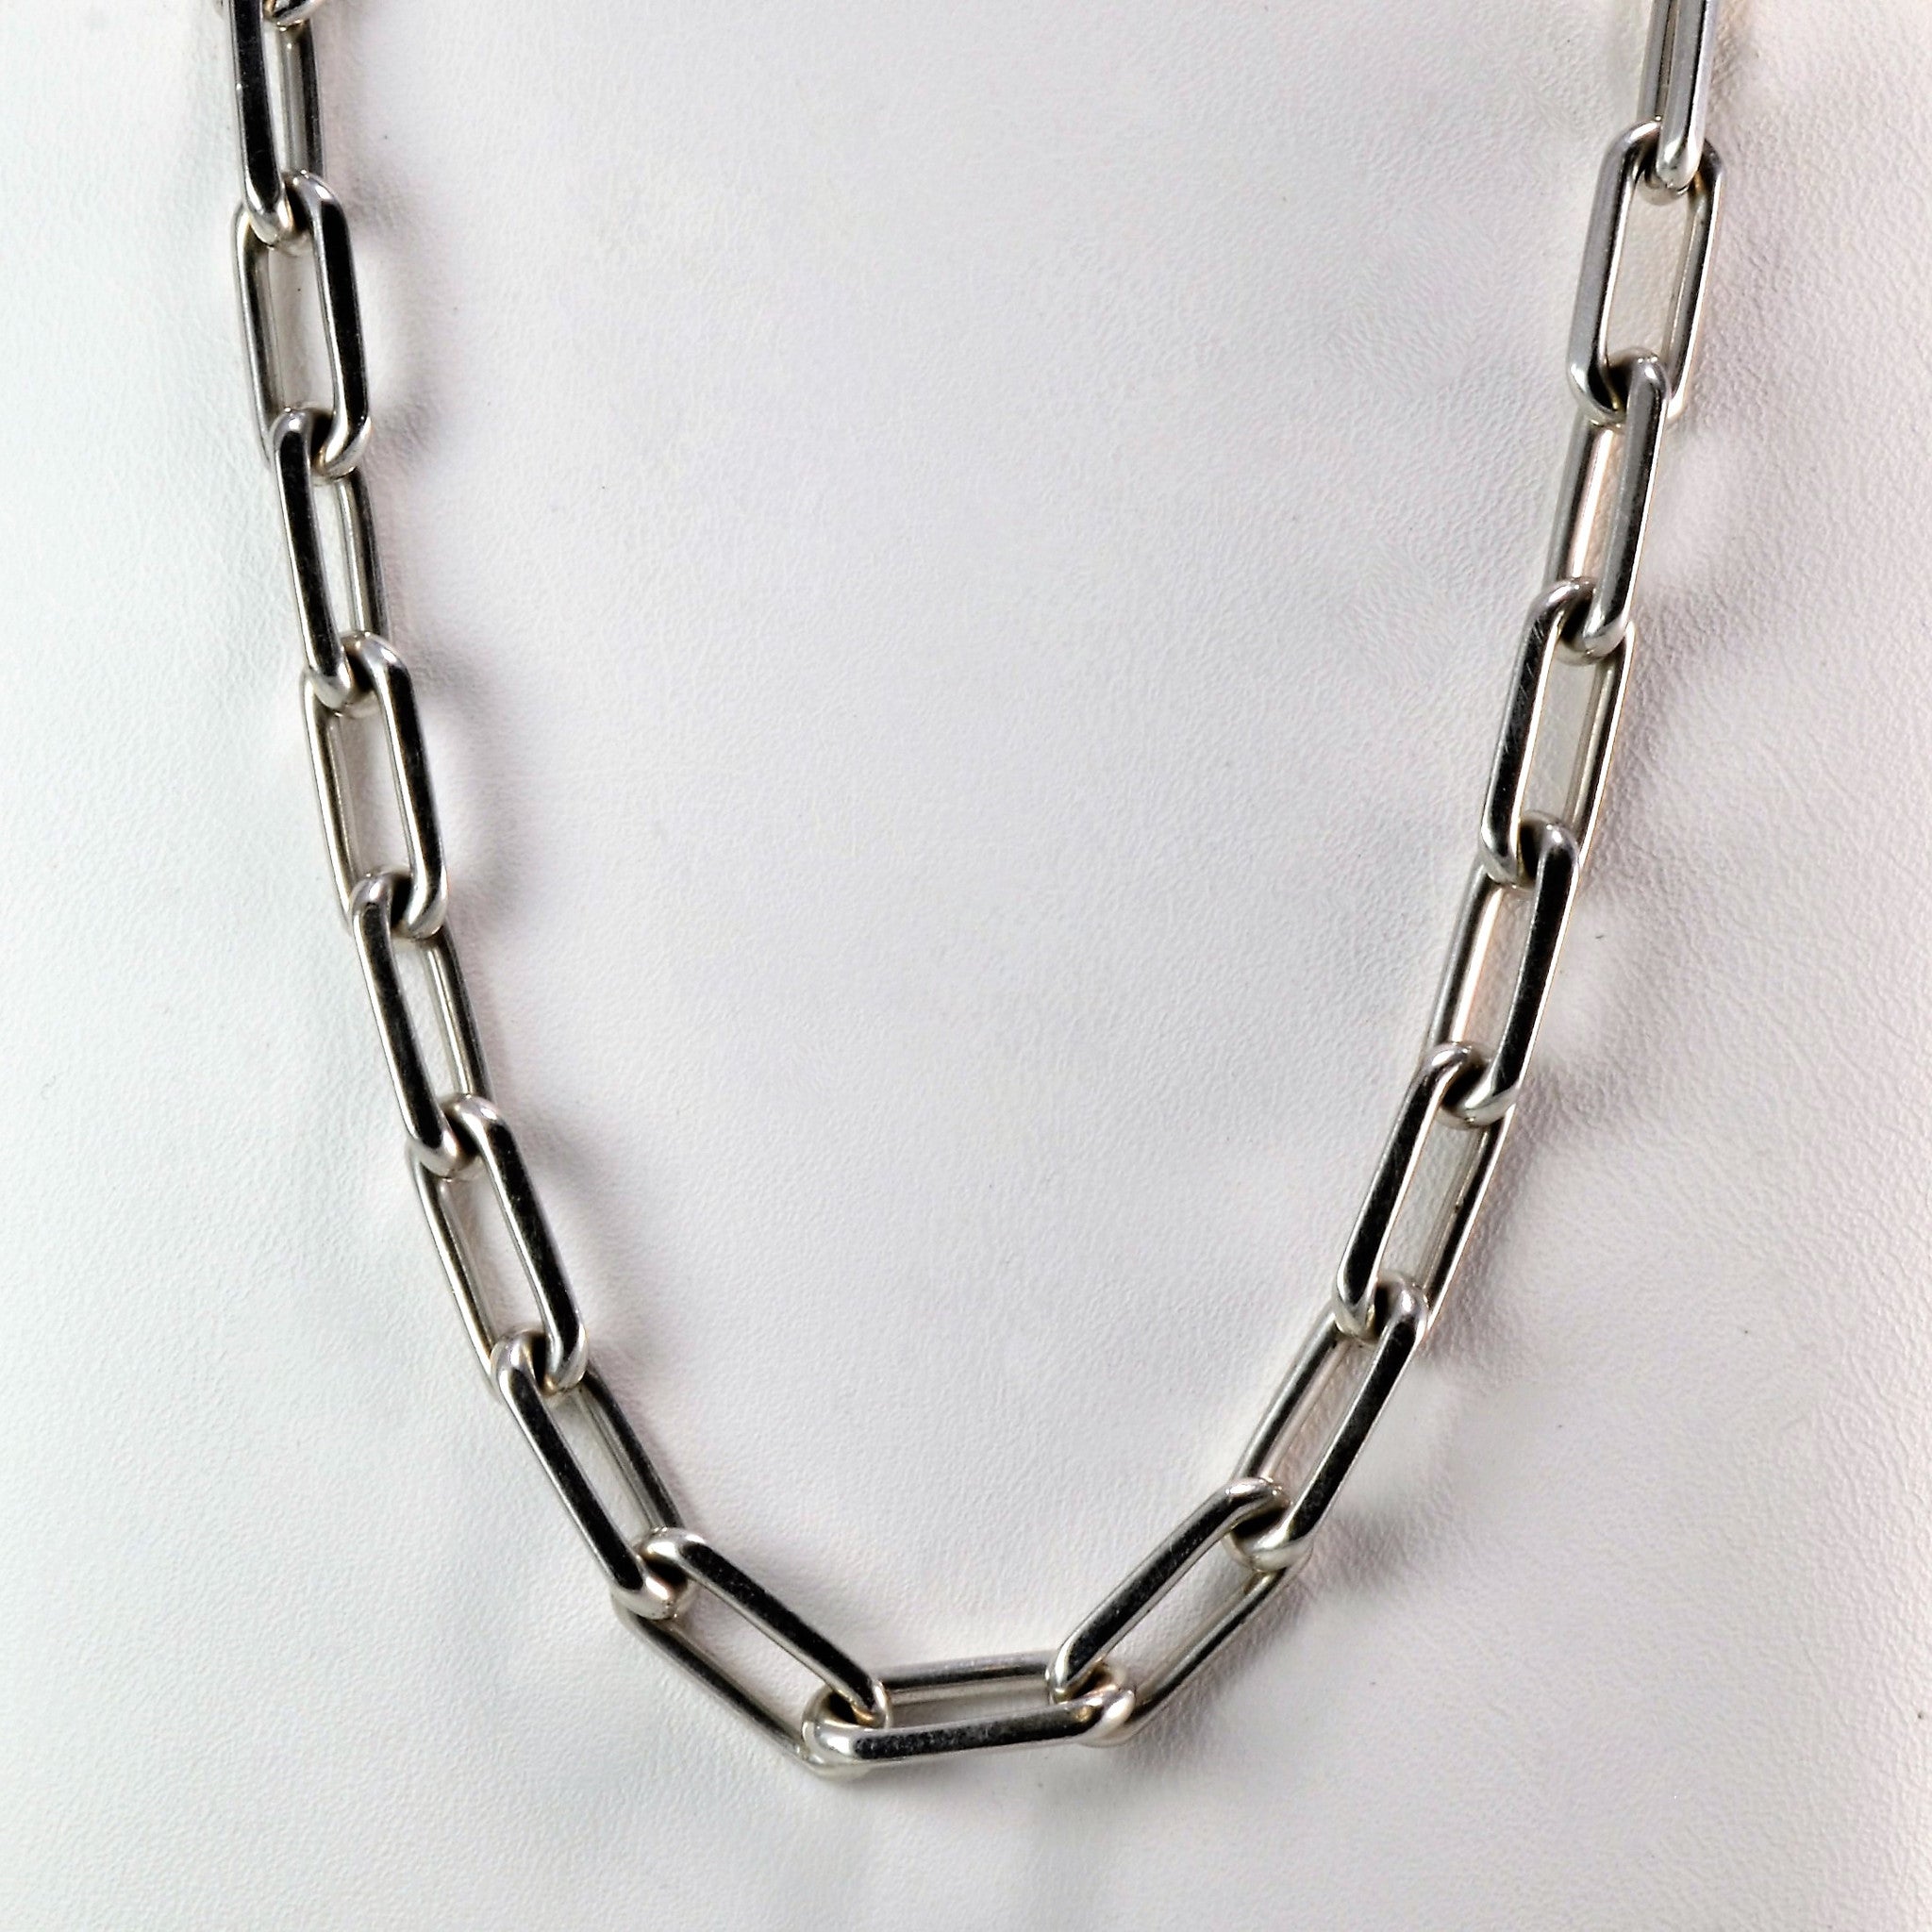 cartier necklace vault